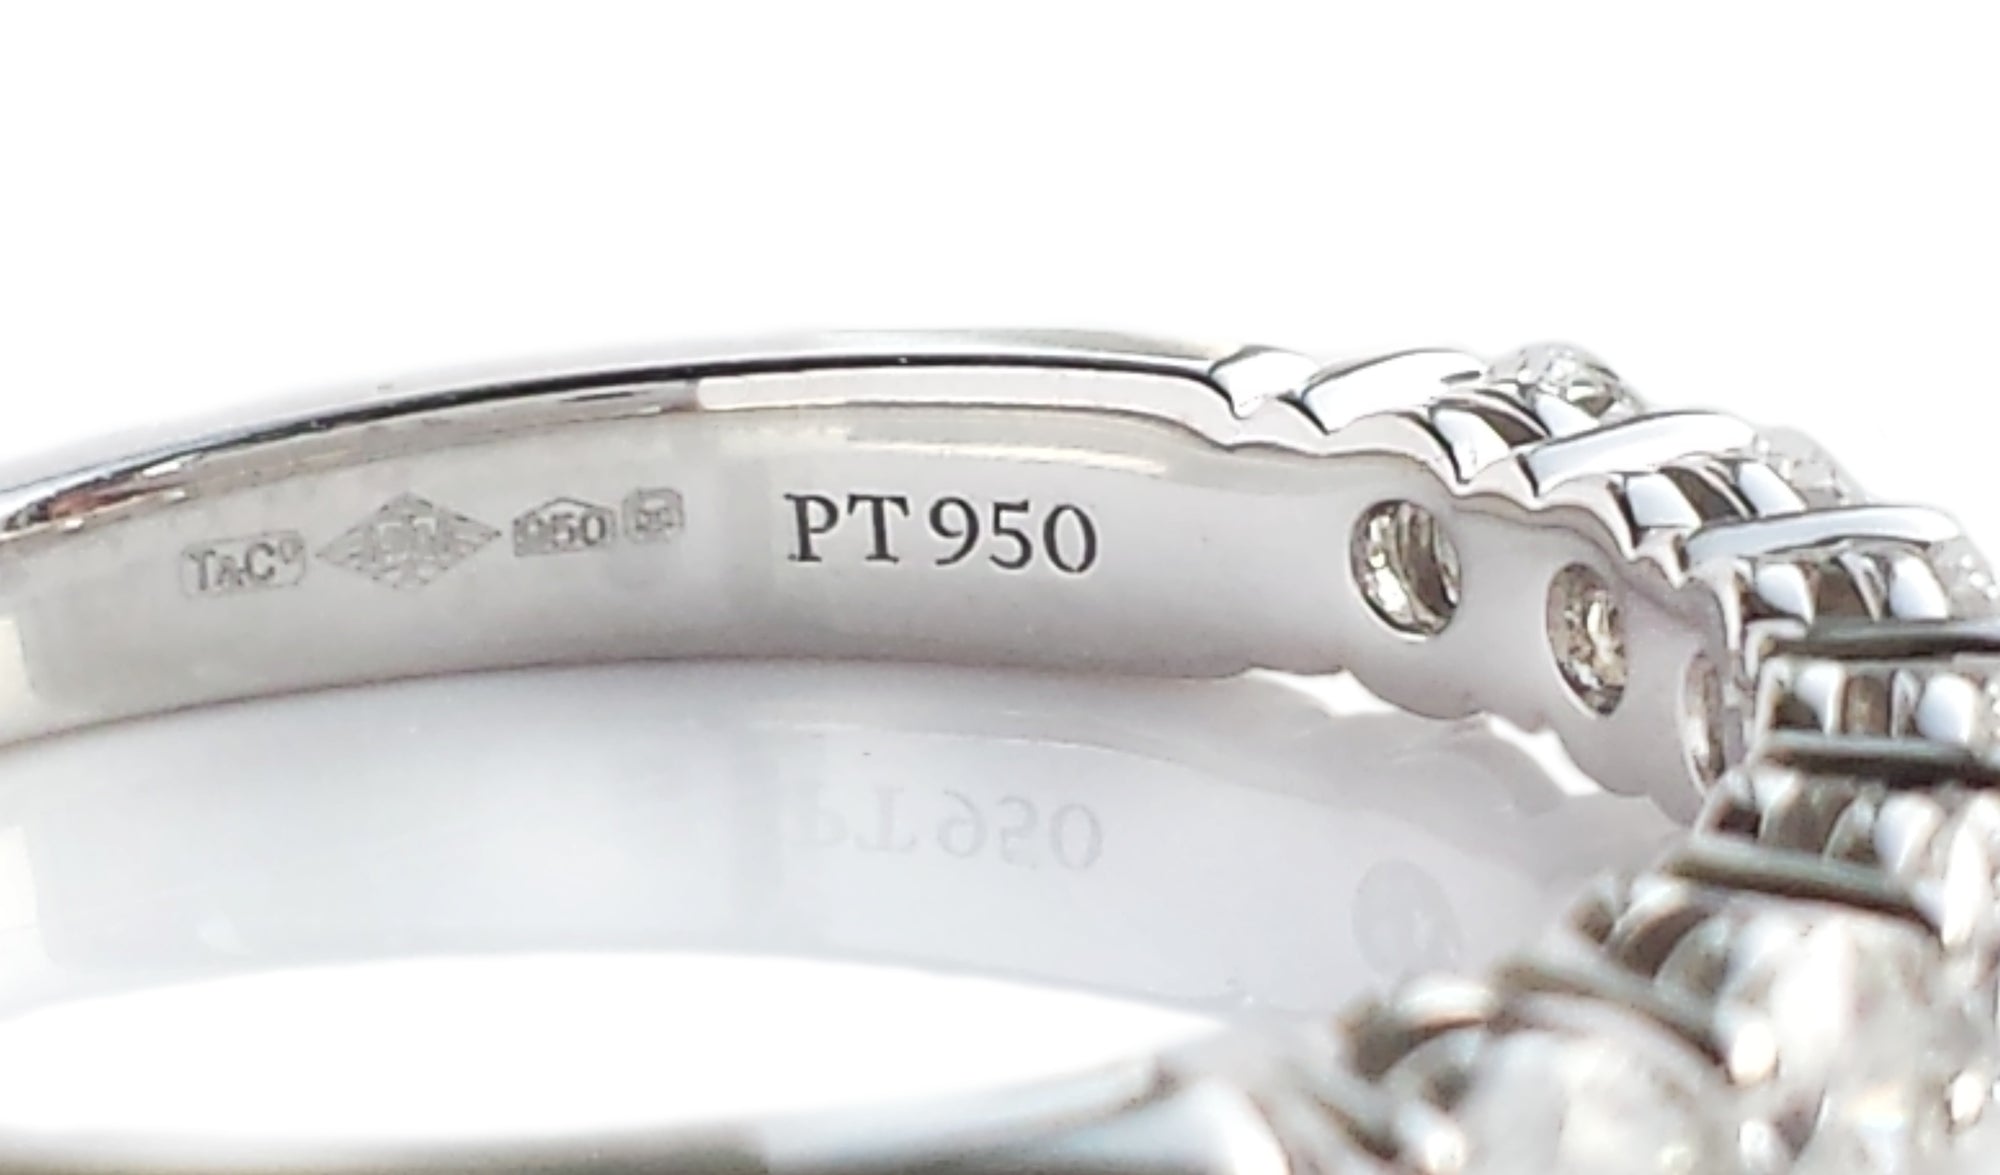 Tiffany & Co .57ct 3mm Diamond Embrace Wedding Band Ring